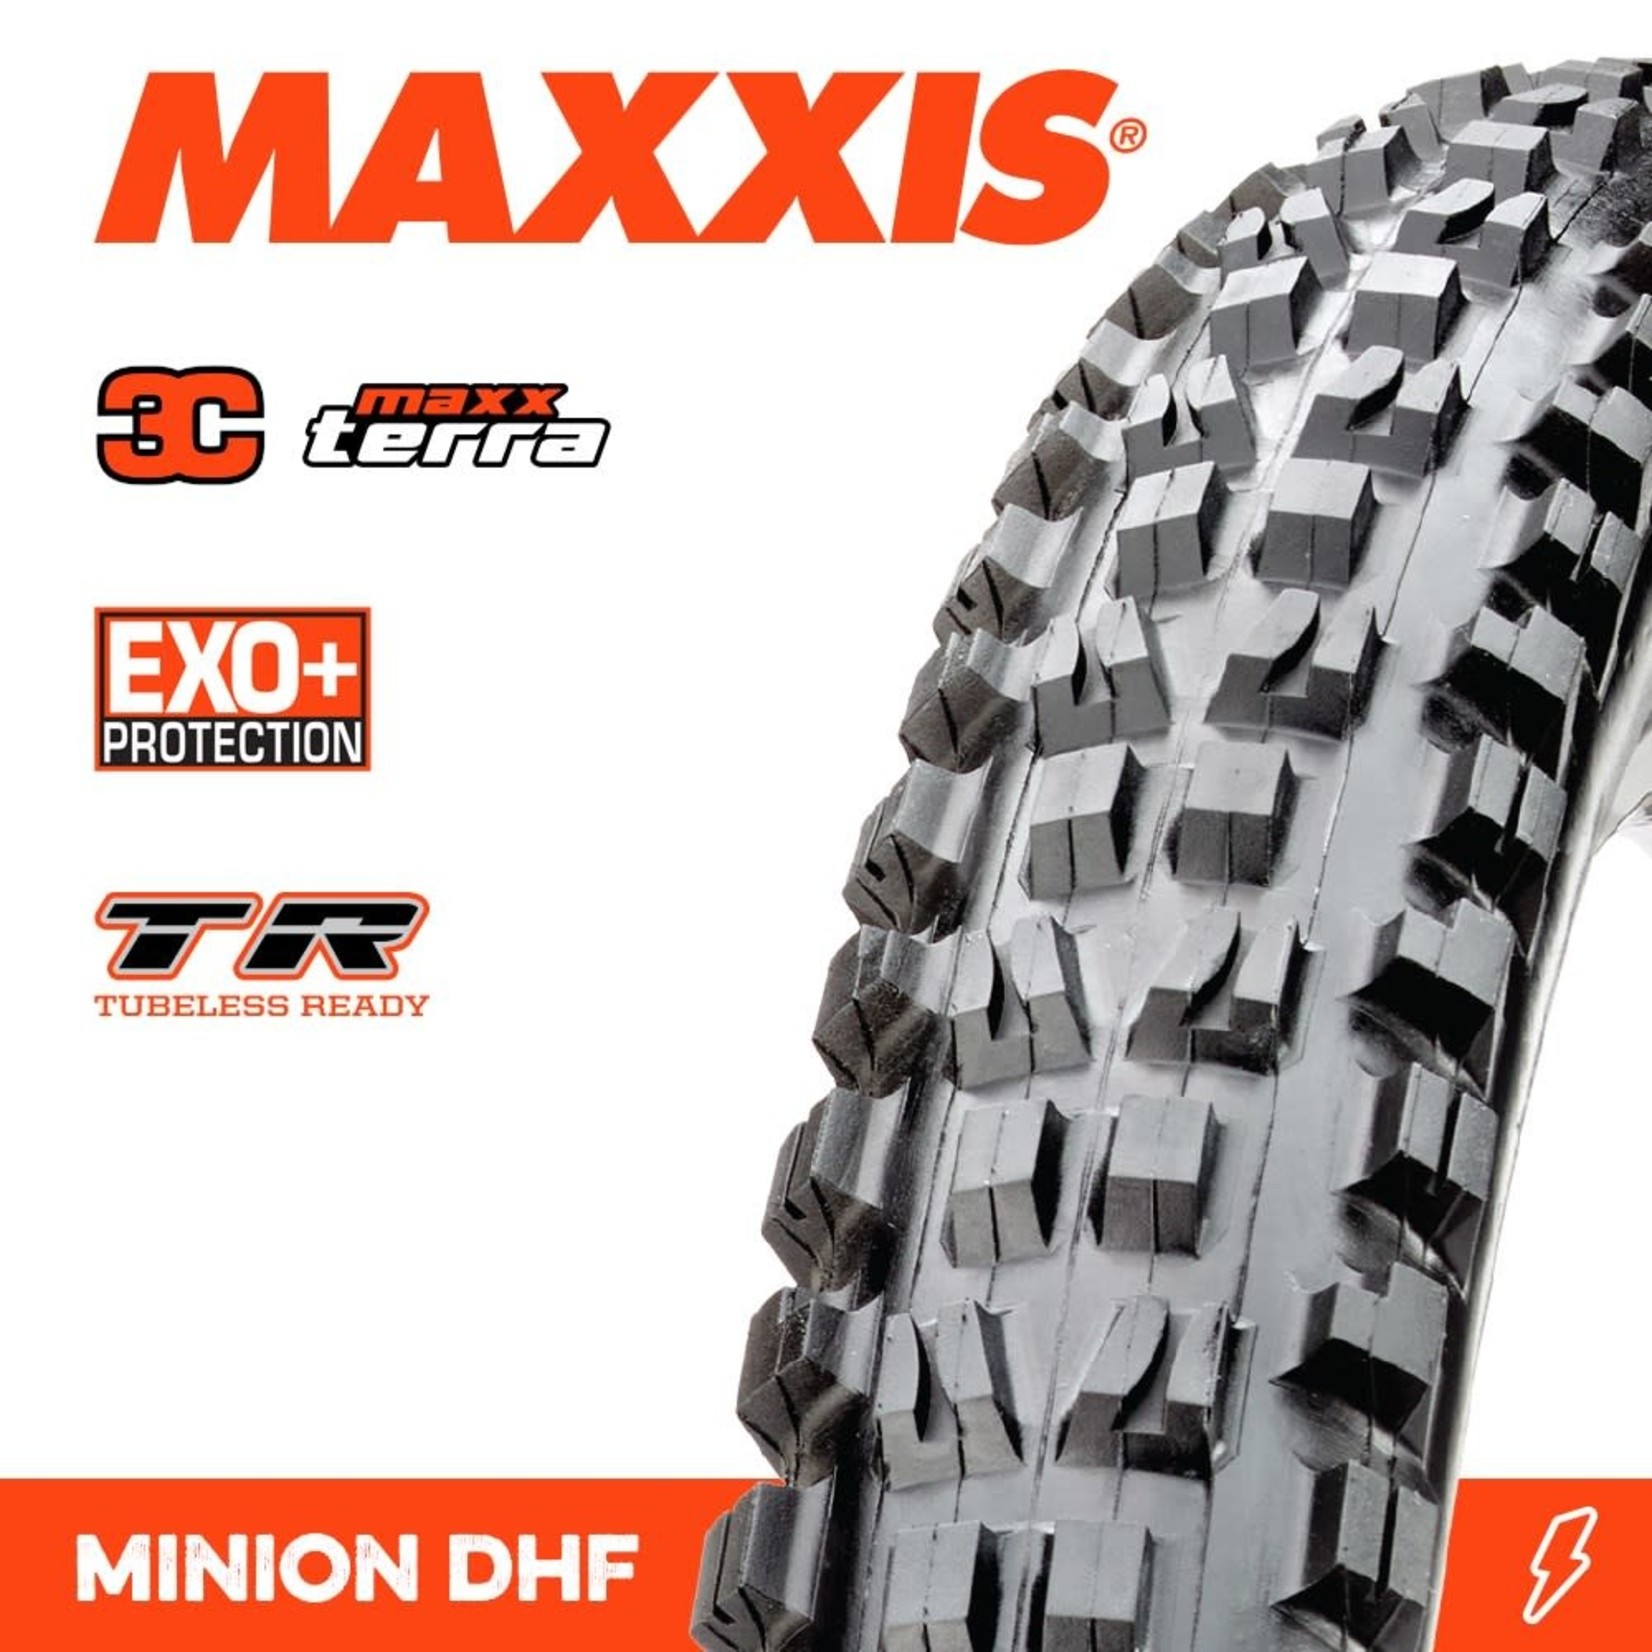 Maxxis Maxxis Minion DHF Tyre - 27.5 X 2.50 - WT 3C Terra Exo+ TR Folding 120TPI - Pair